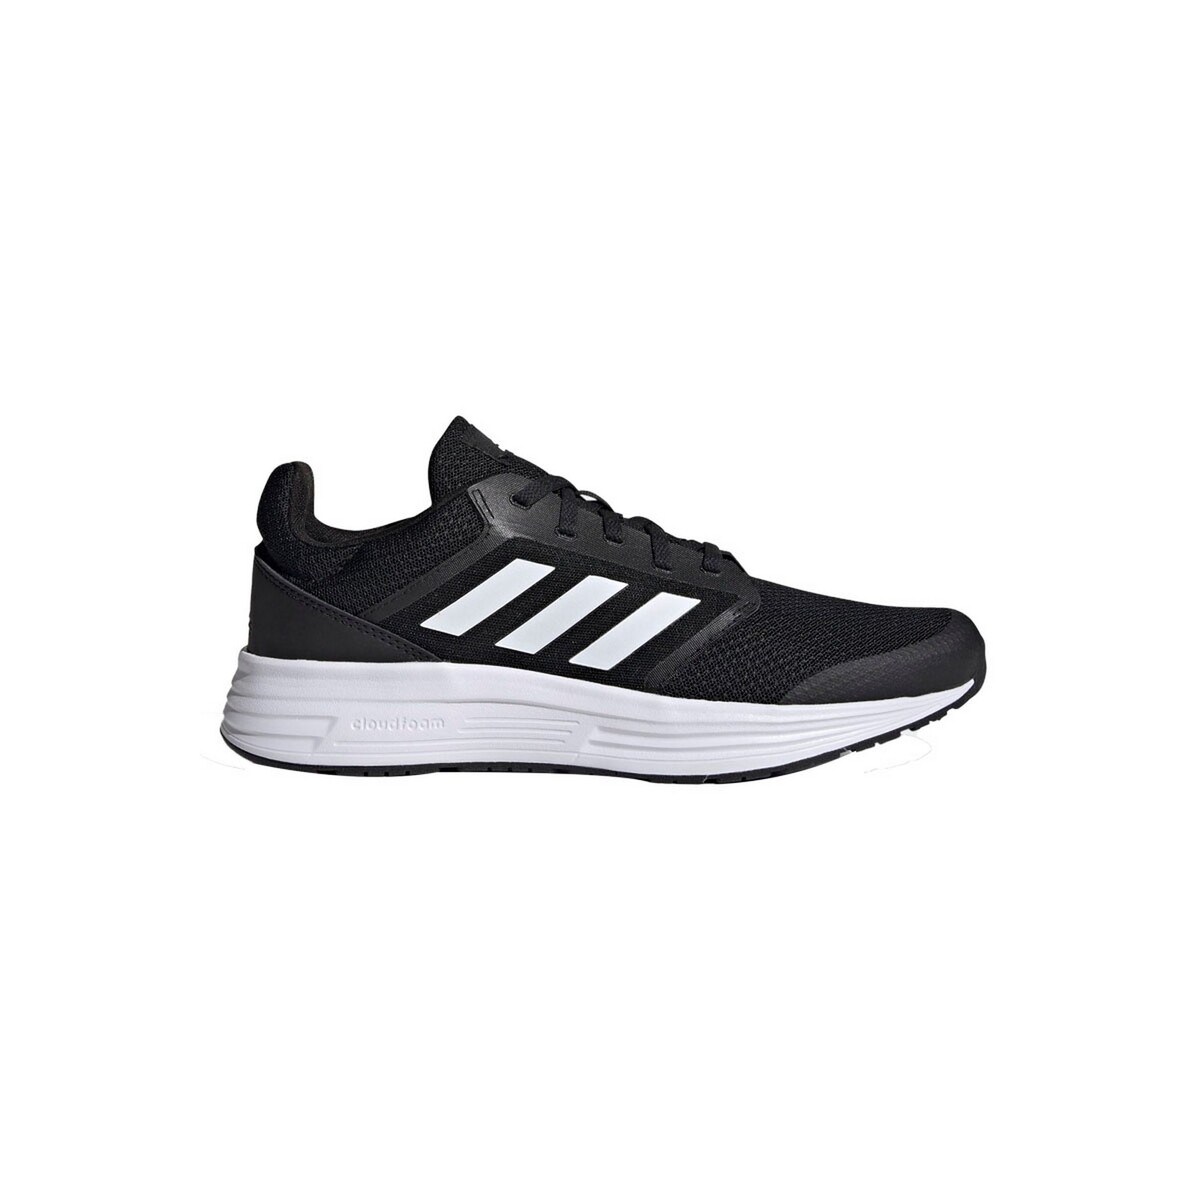 Adidas Mens Sports Shoes FW5717, 7